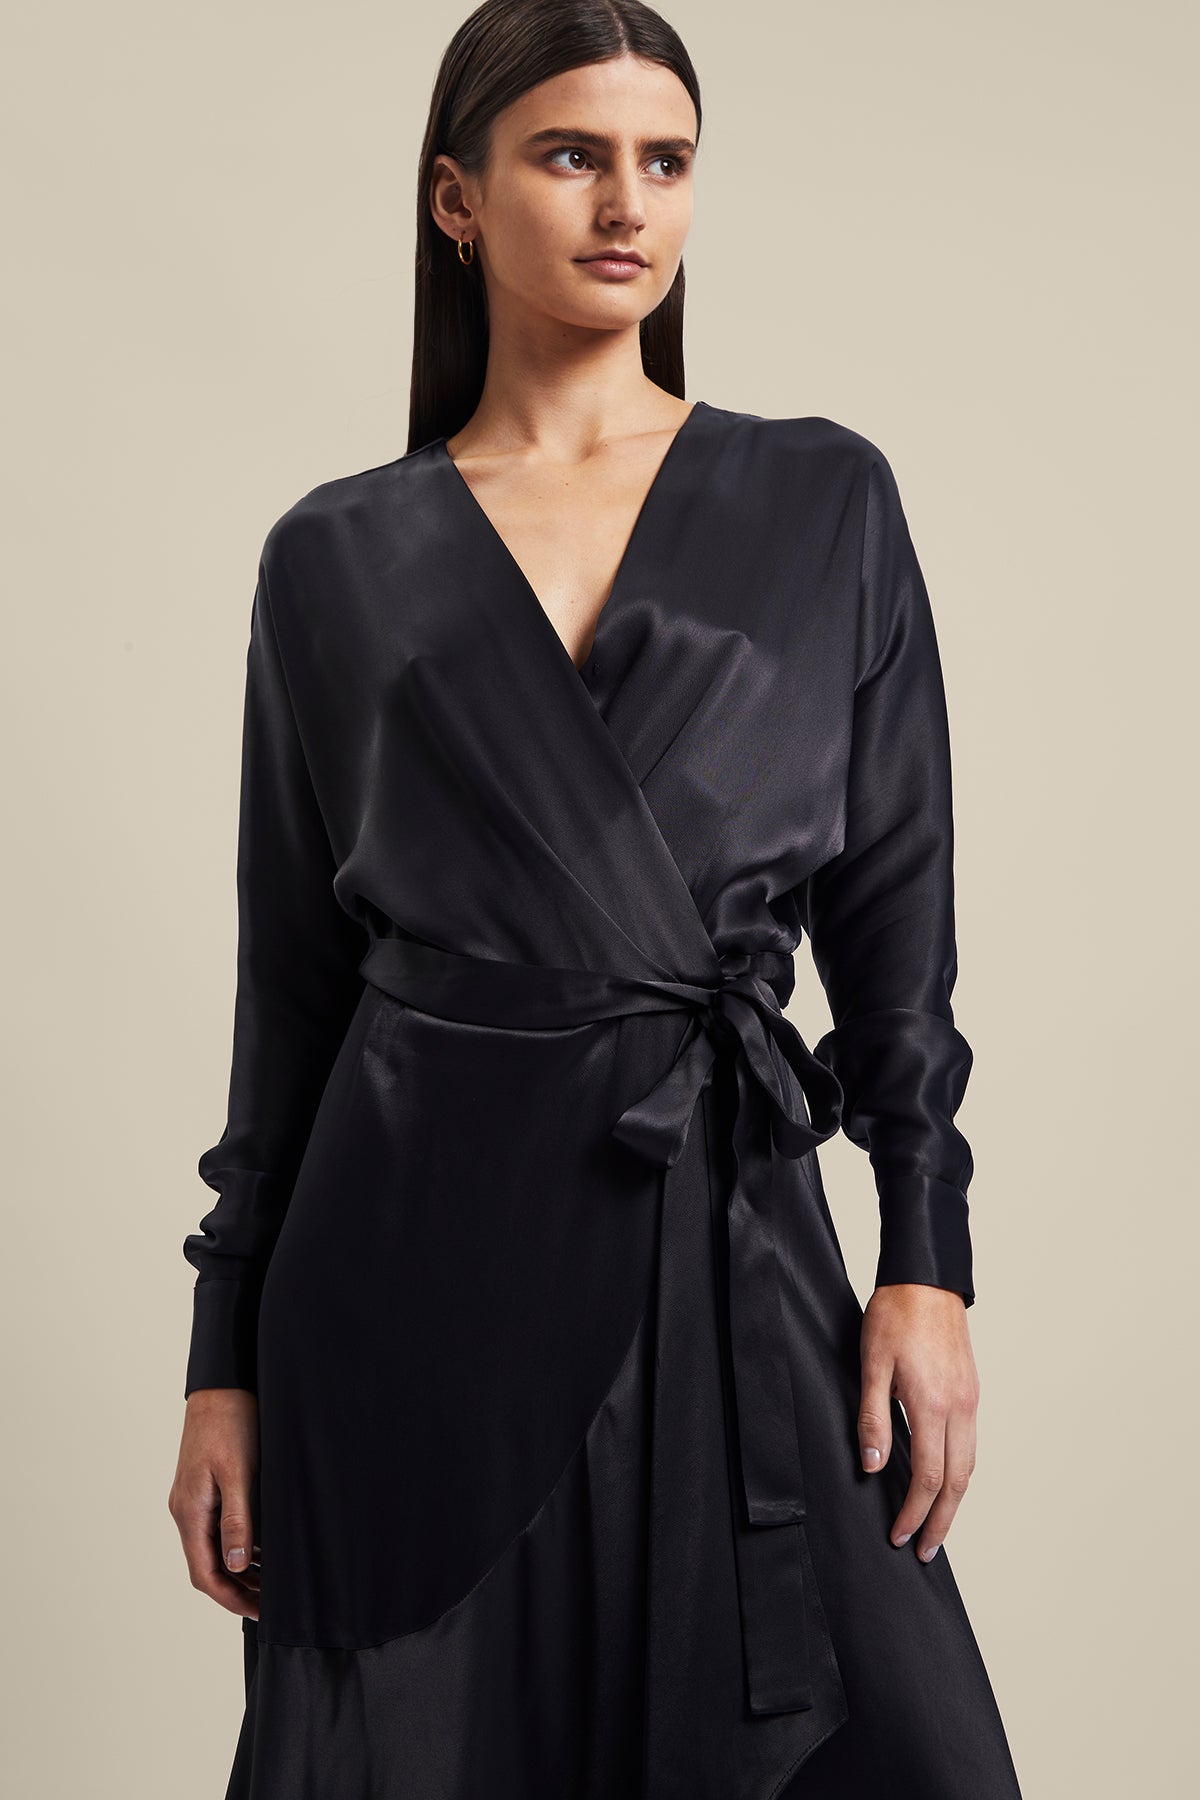 Model wearing black Nocturnal Wrap Dress from Australian luxury designer GINGER & SMART, featuring , long sleeves with wrist cuffs, waist tie, V neckline, midi length with bias cut asymmetrical hemline.